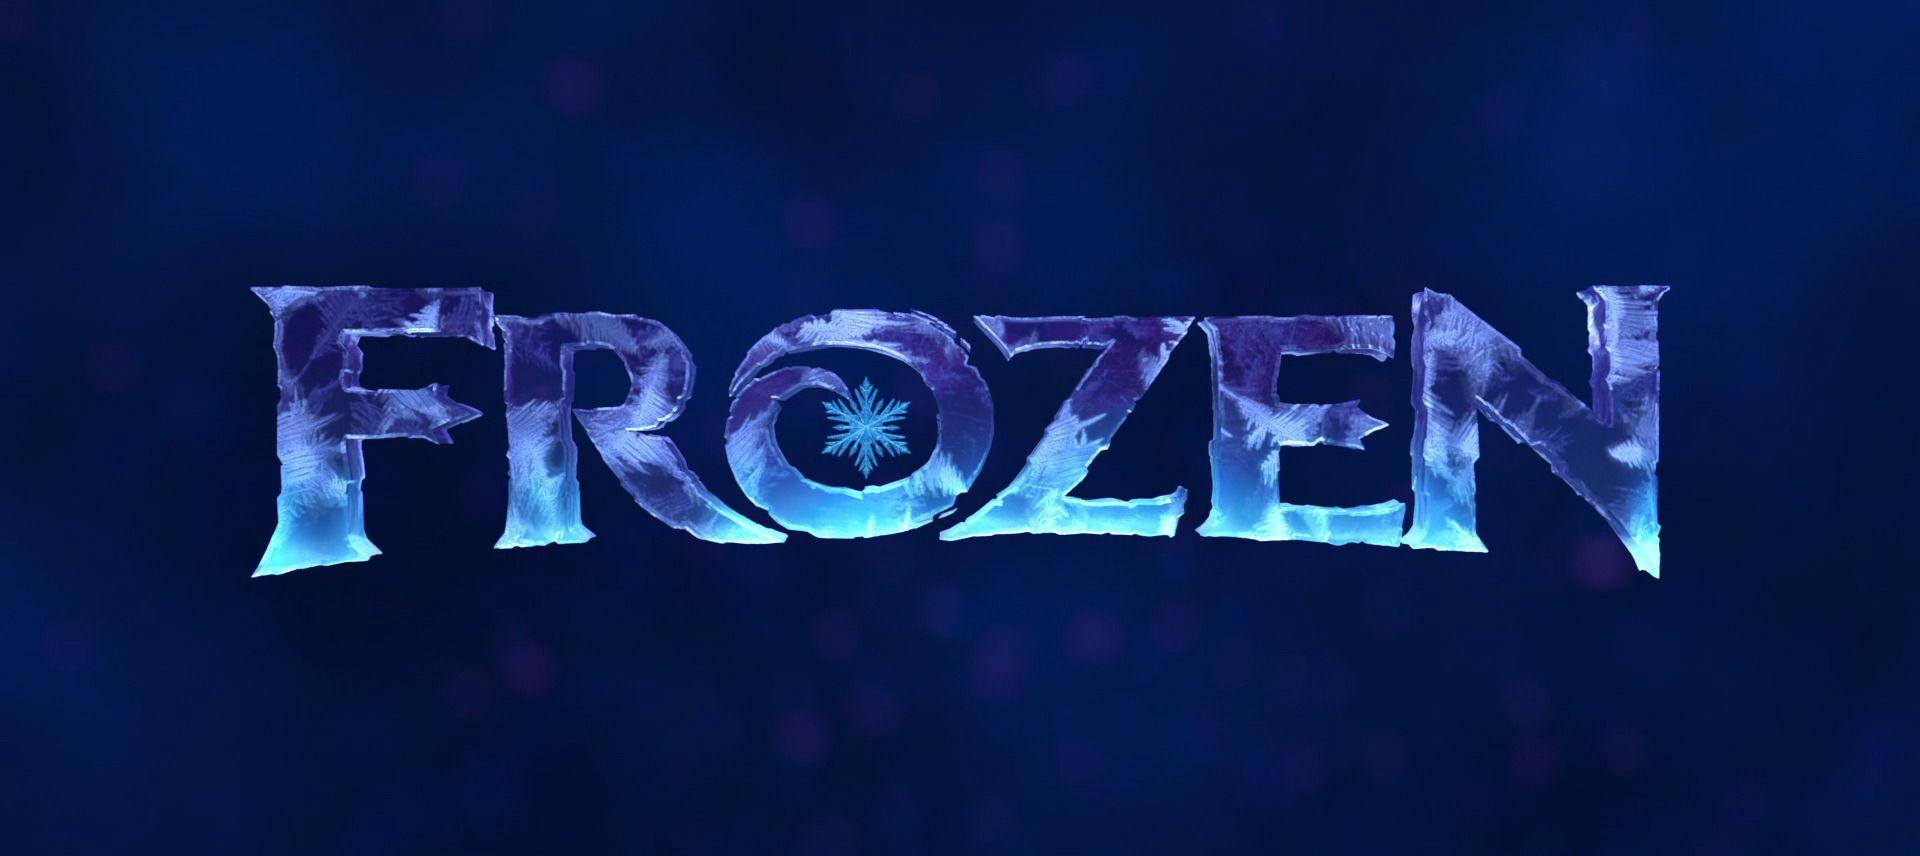 Blue Frozen Logo - Frozen images FROZEN ENGLISH LOGO HD wallpaper and background photos ...